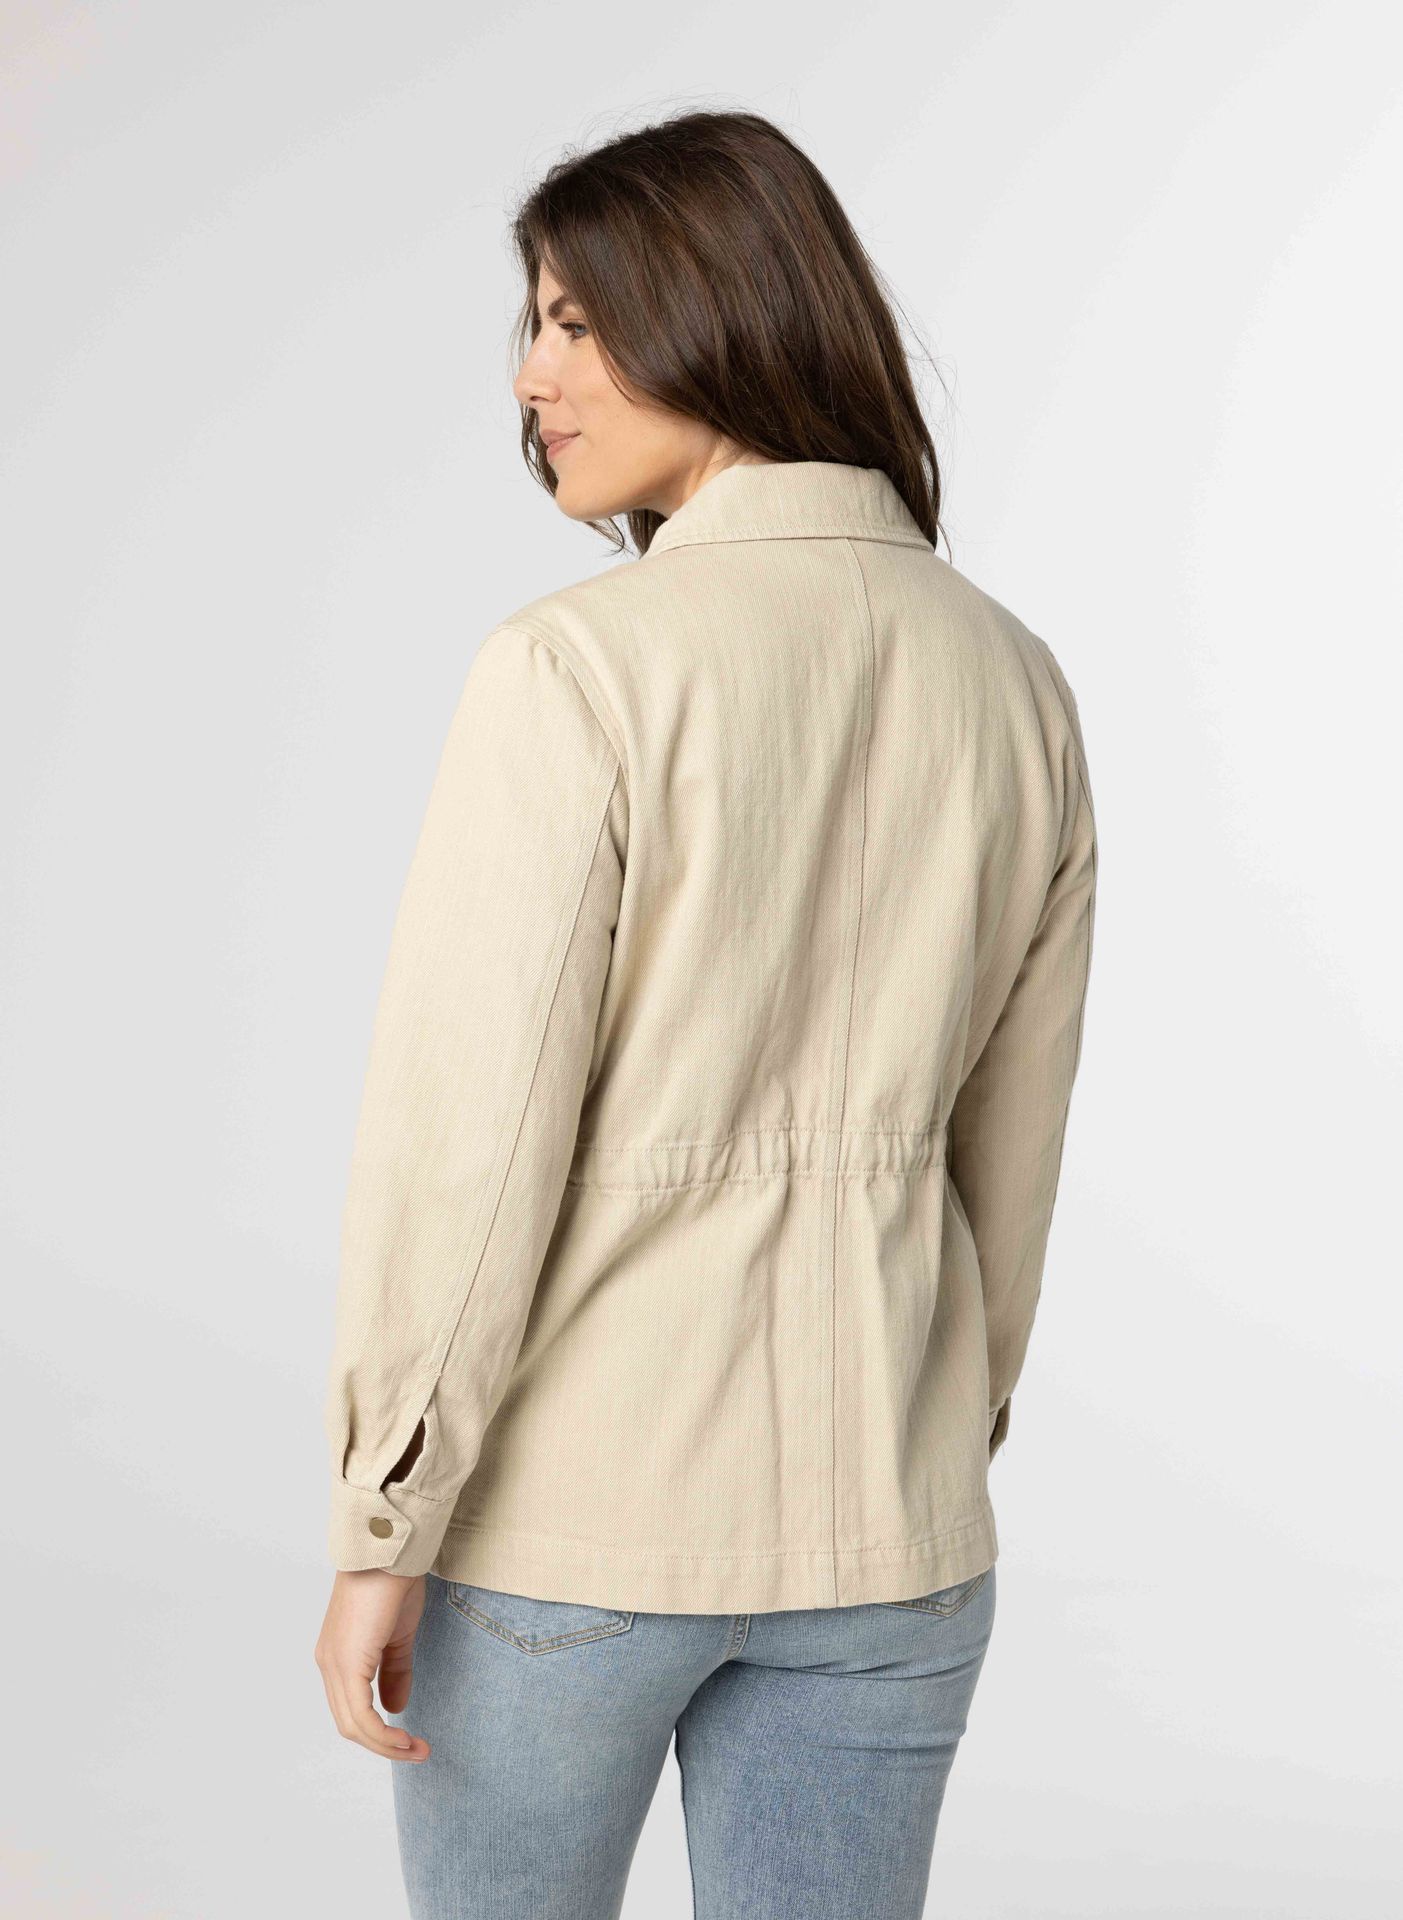 Norah Beige jacket oyster 212632-109